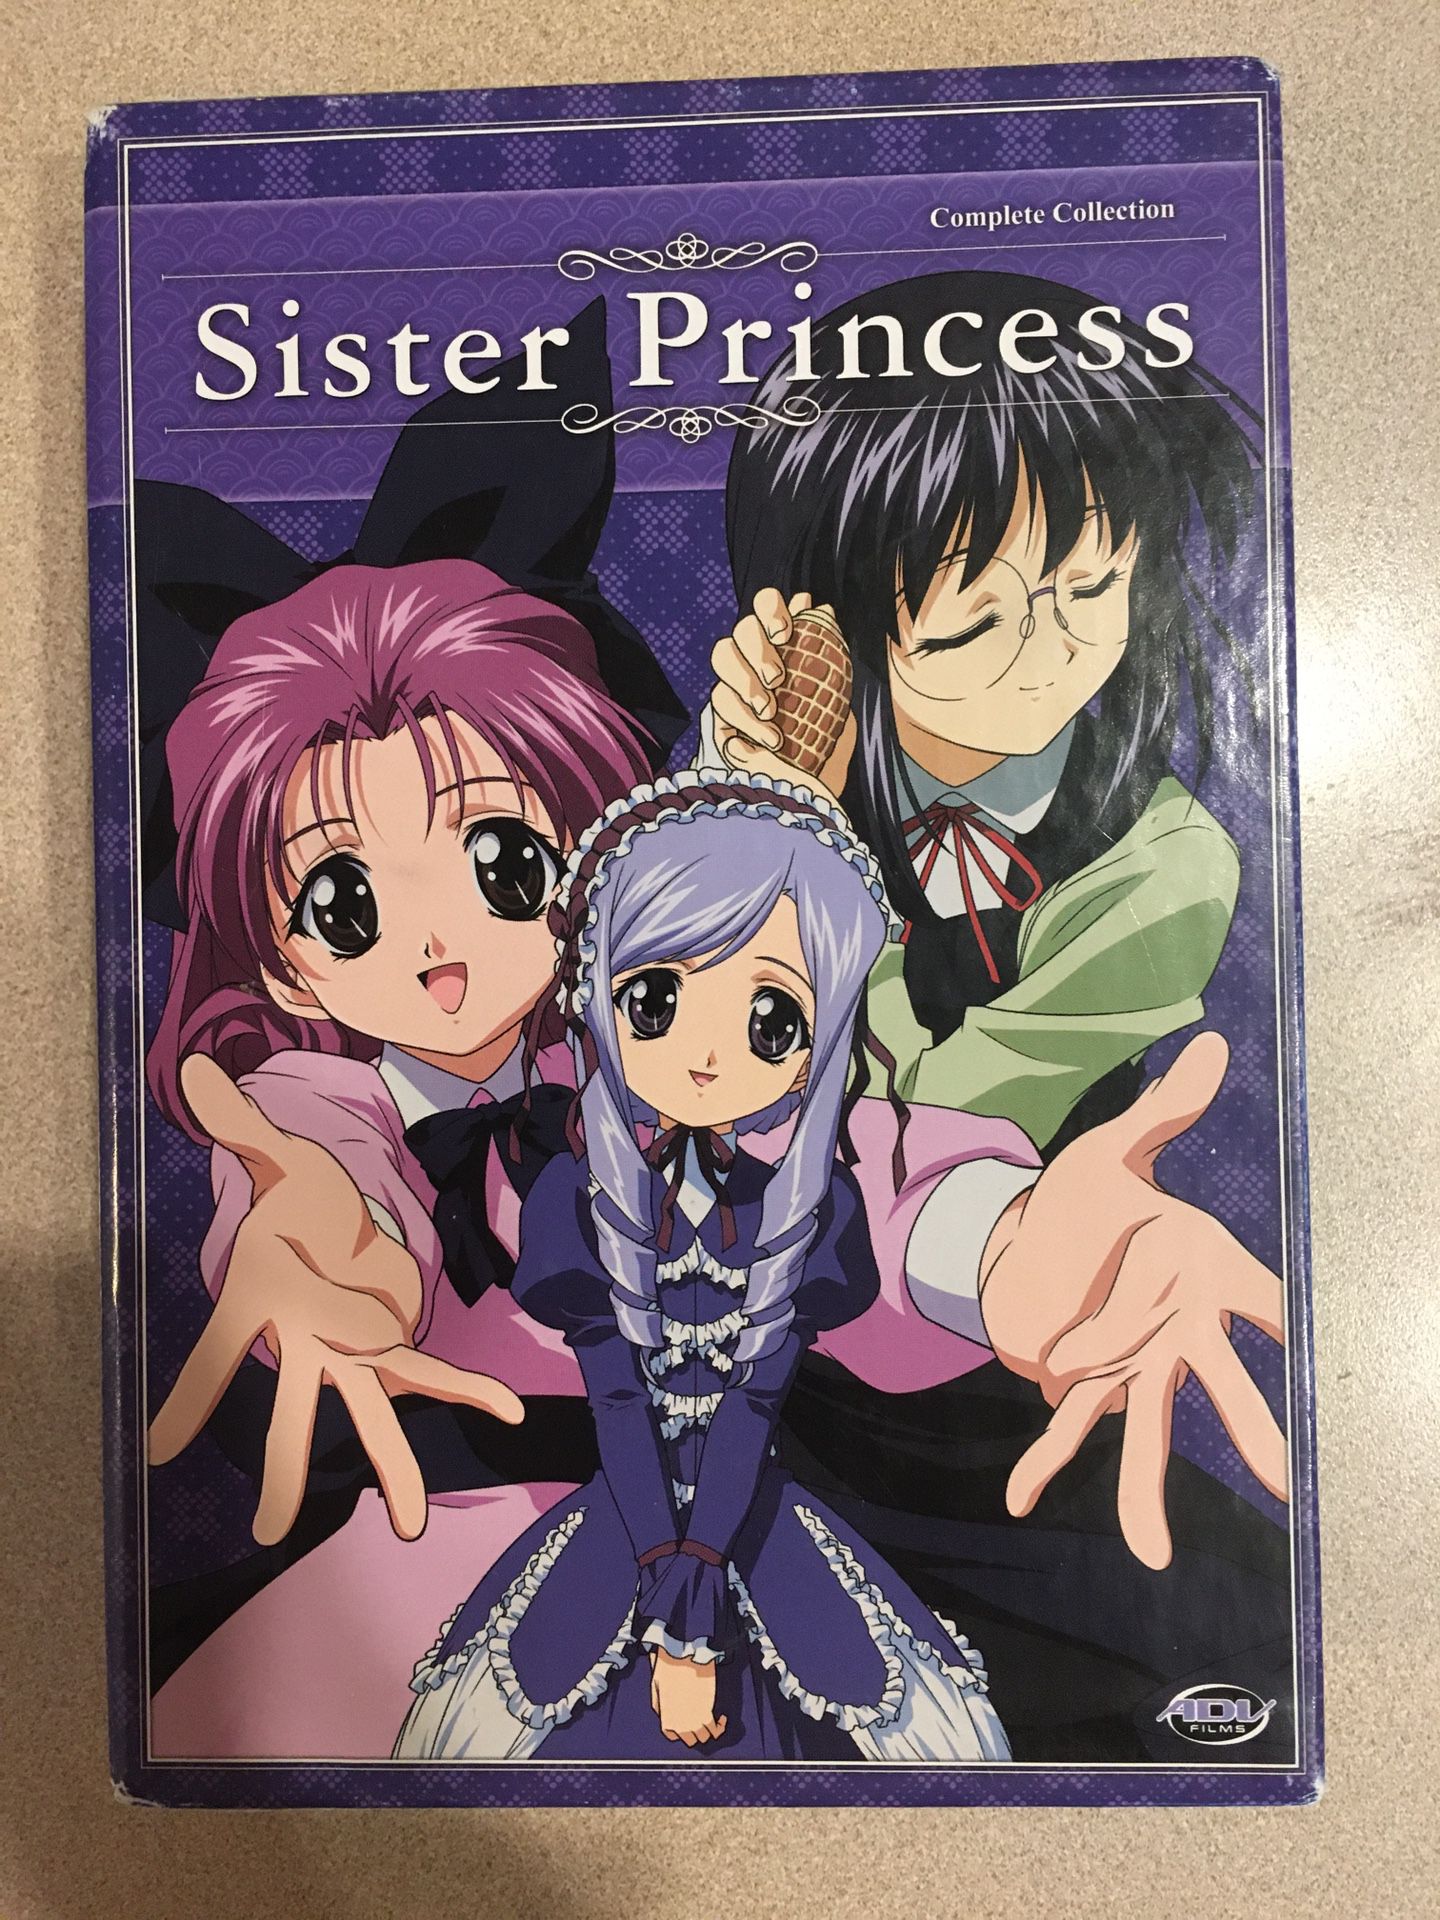 Sister Princess DVD set